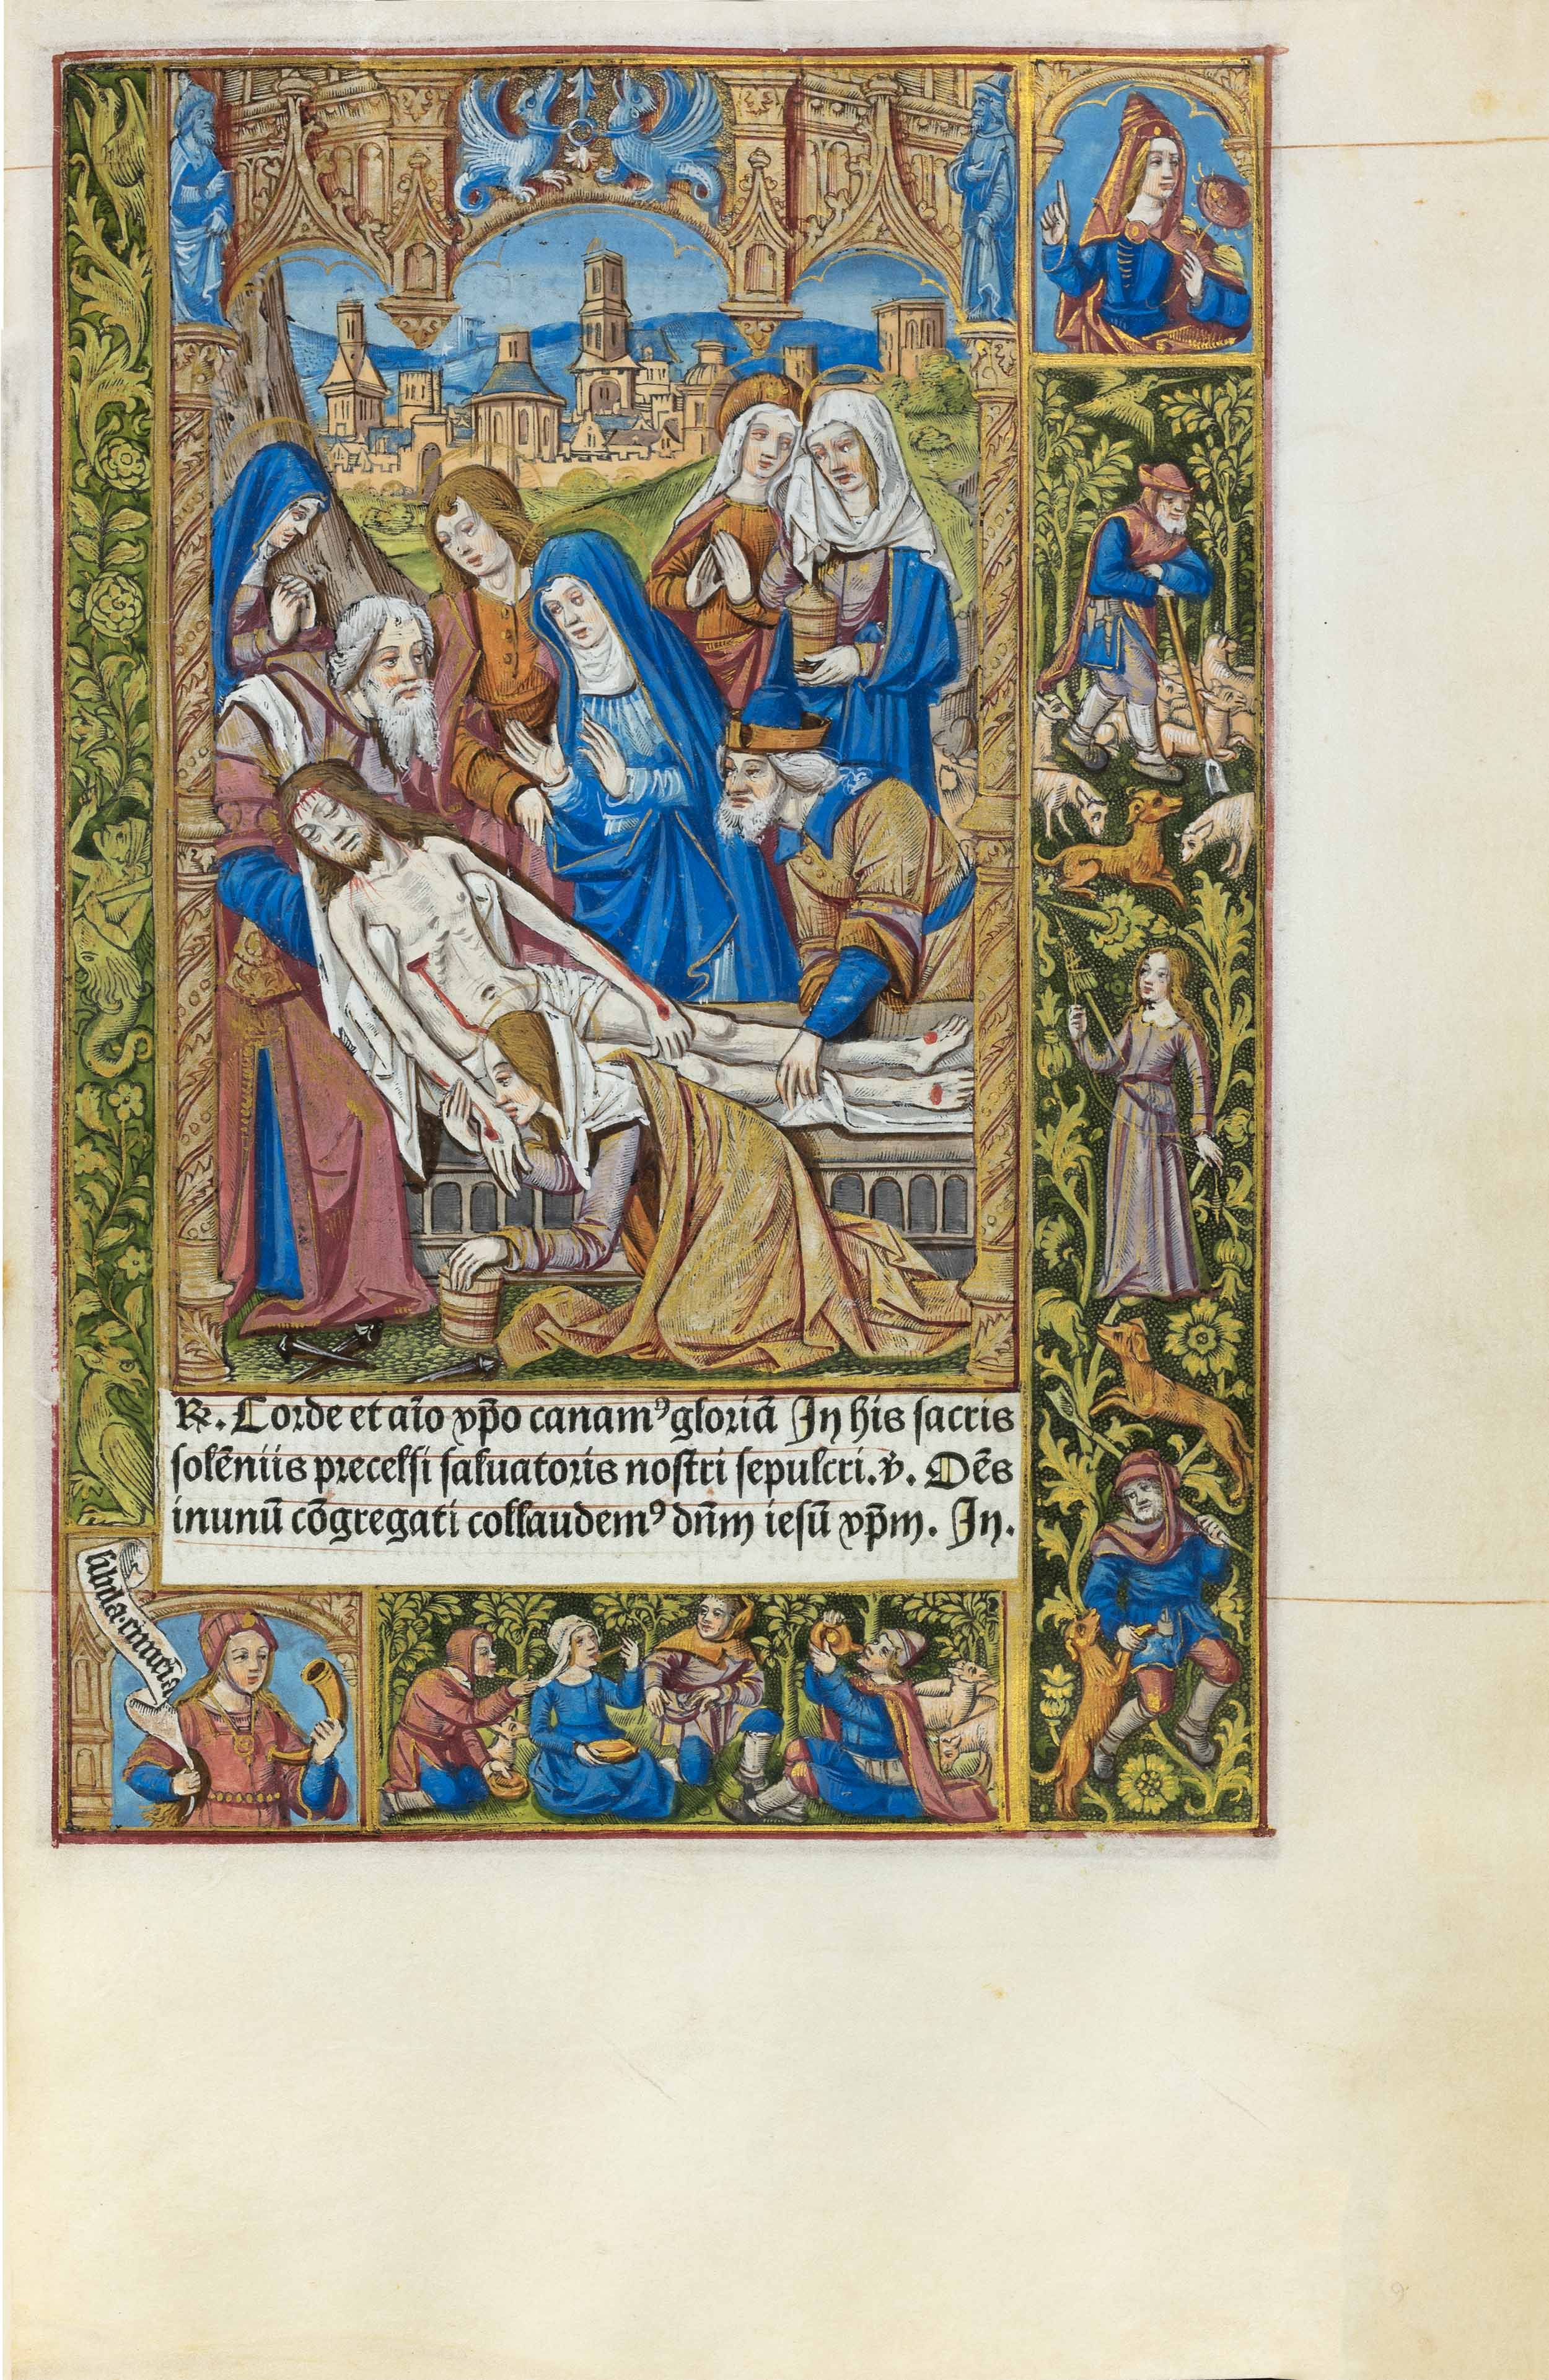 horae-bmv-16.9.1498-printed-book-of-hours-pigouchet-vostre-calixto crotus-illuminated-vellum-doheny-arcana-48.jpg